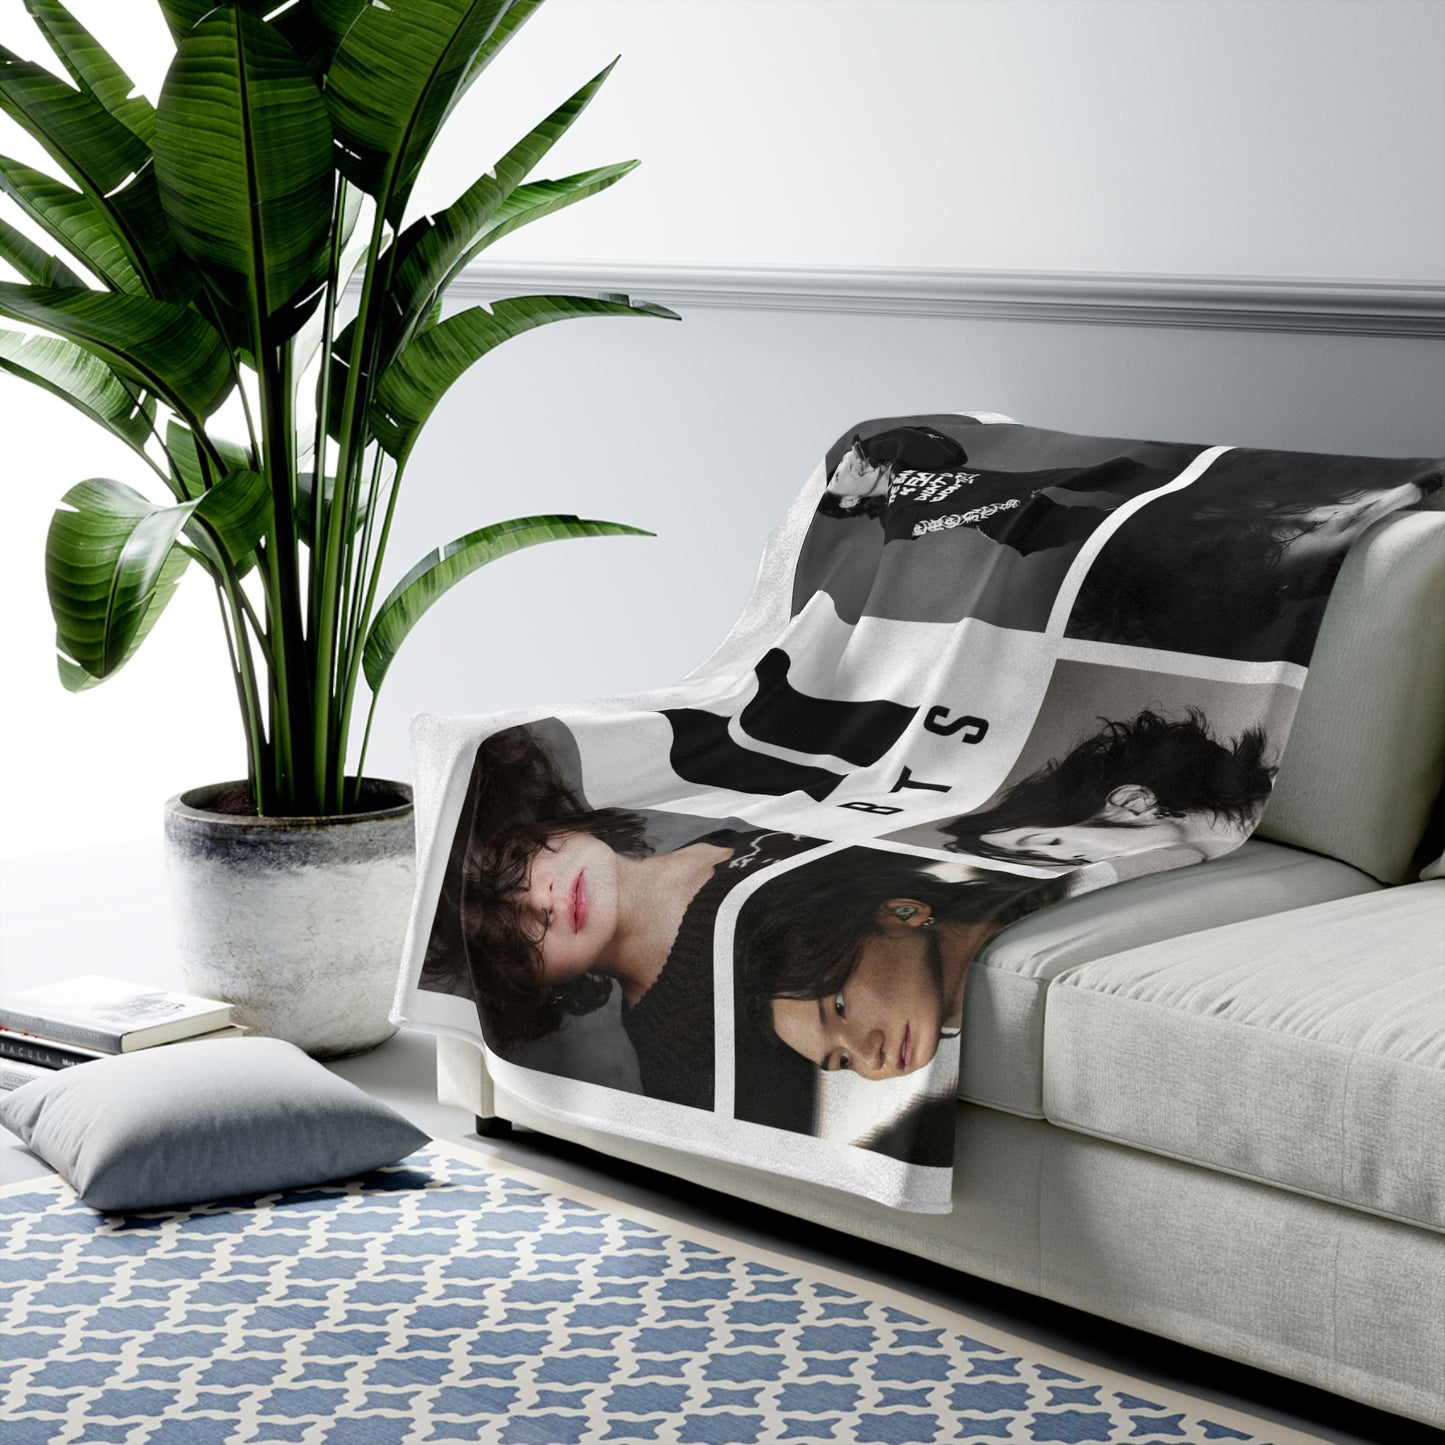 Suga Photo Collage Blanket | Min Yoongi Army Velveteen Plush Blanket 006